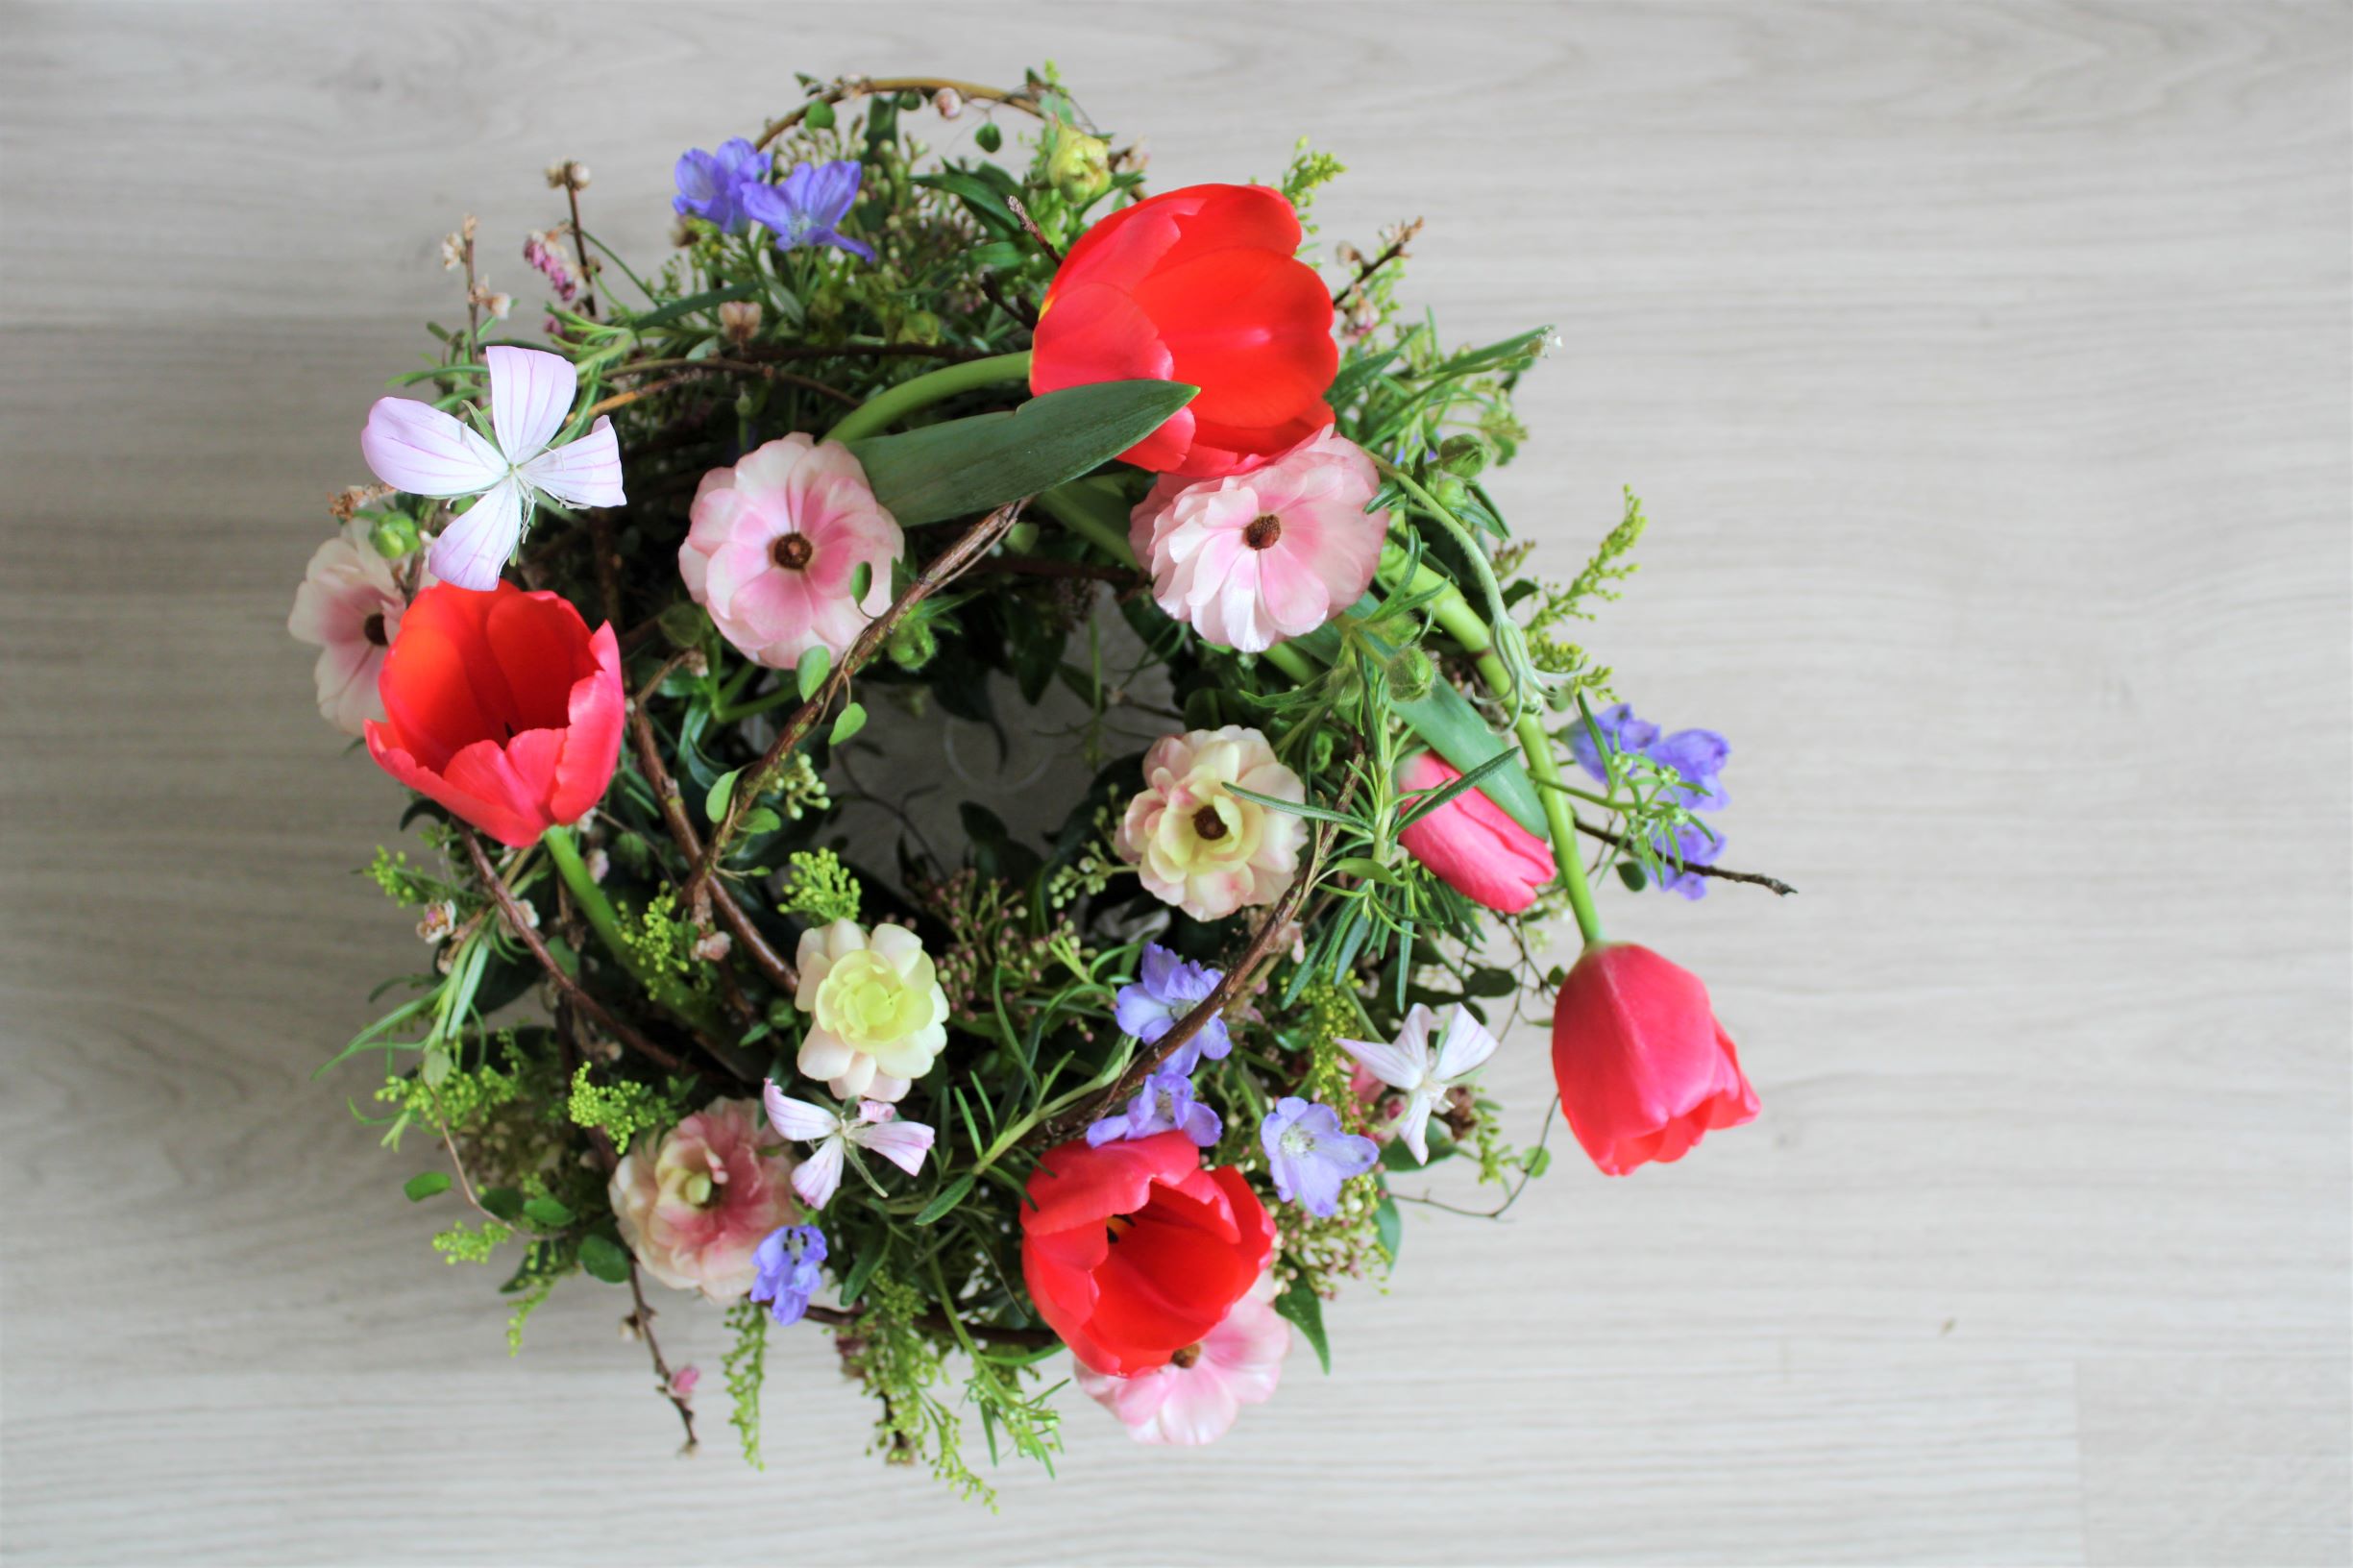 In Praise of Slow Life – Garden-style Flower Workshop